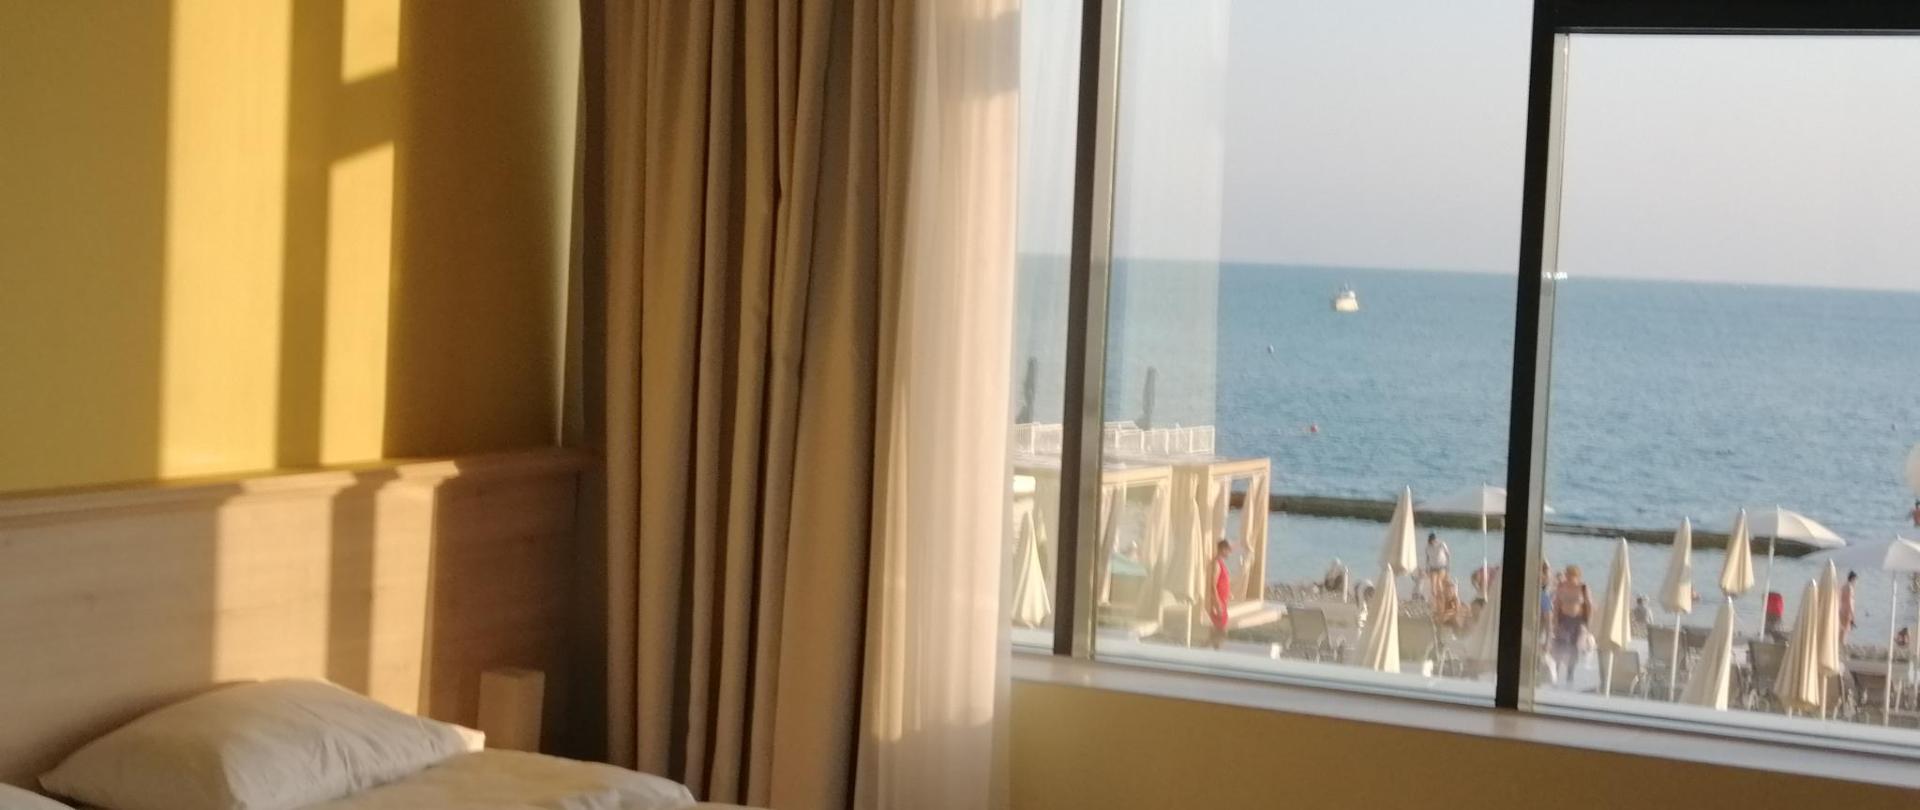 Portofino hotel